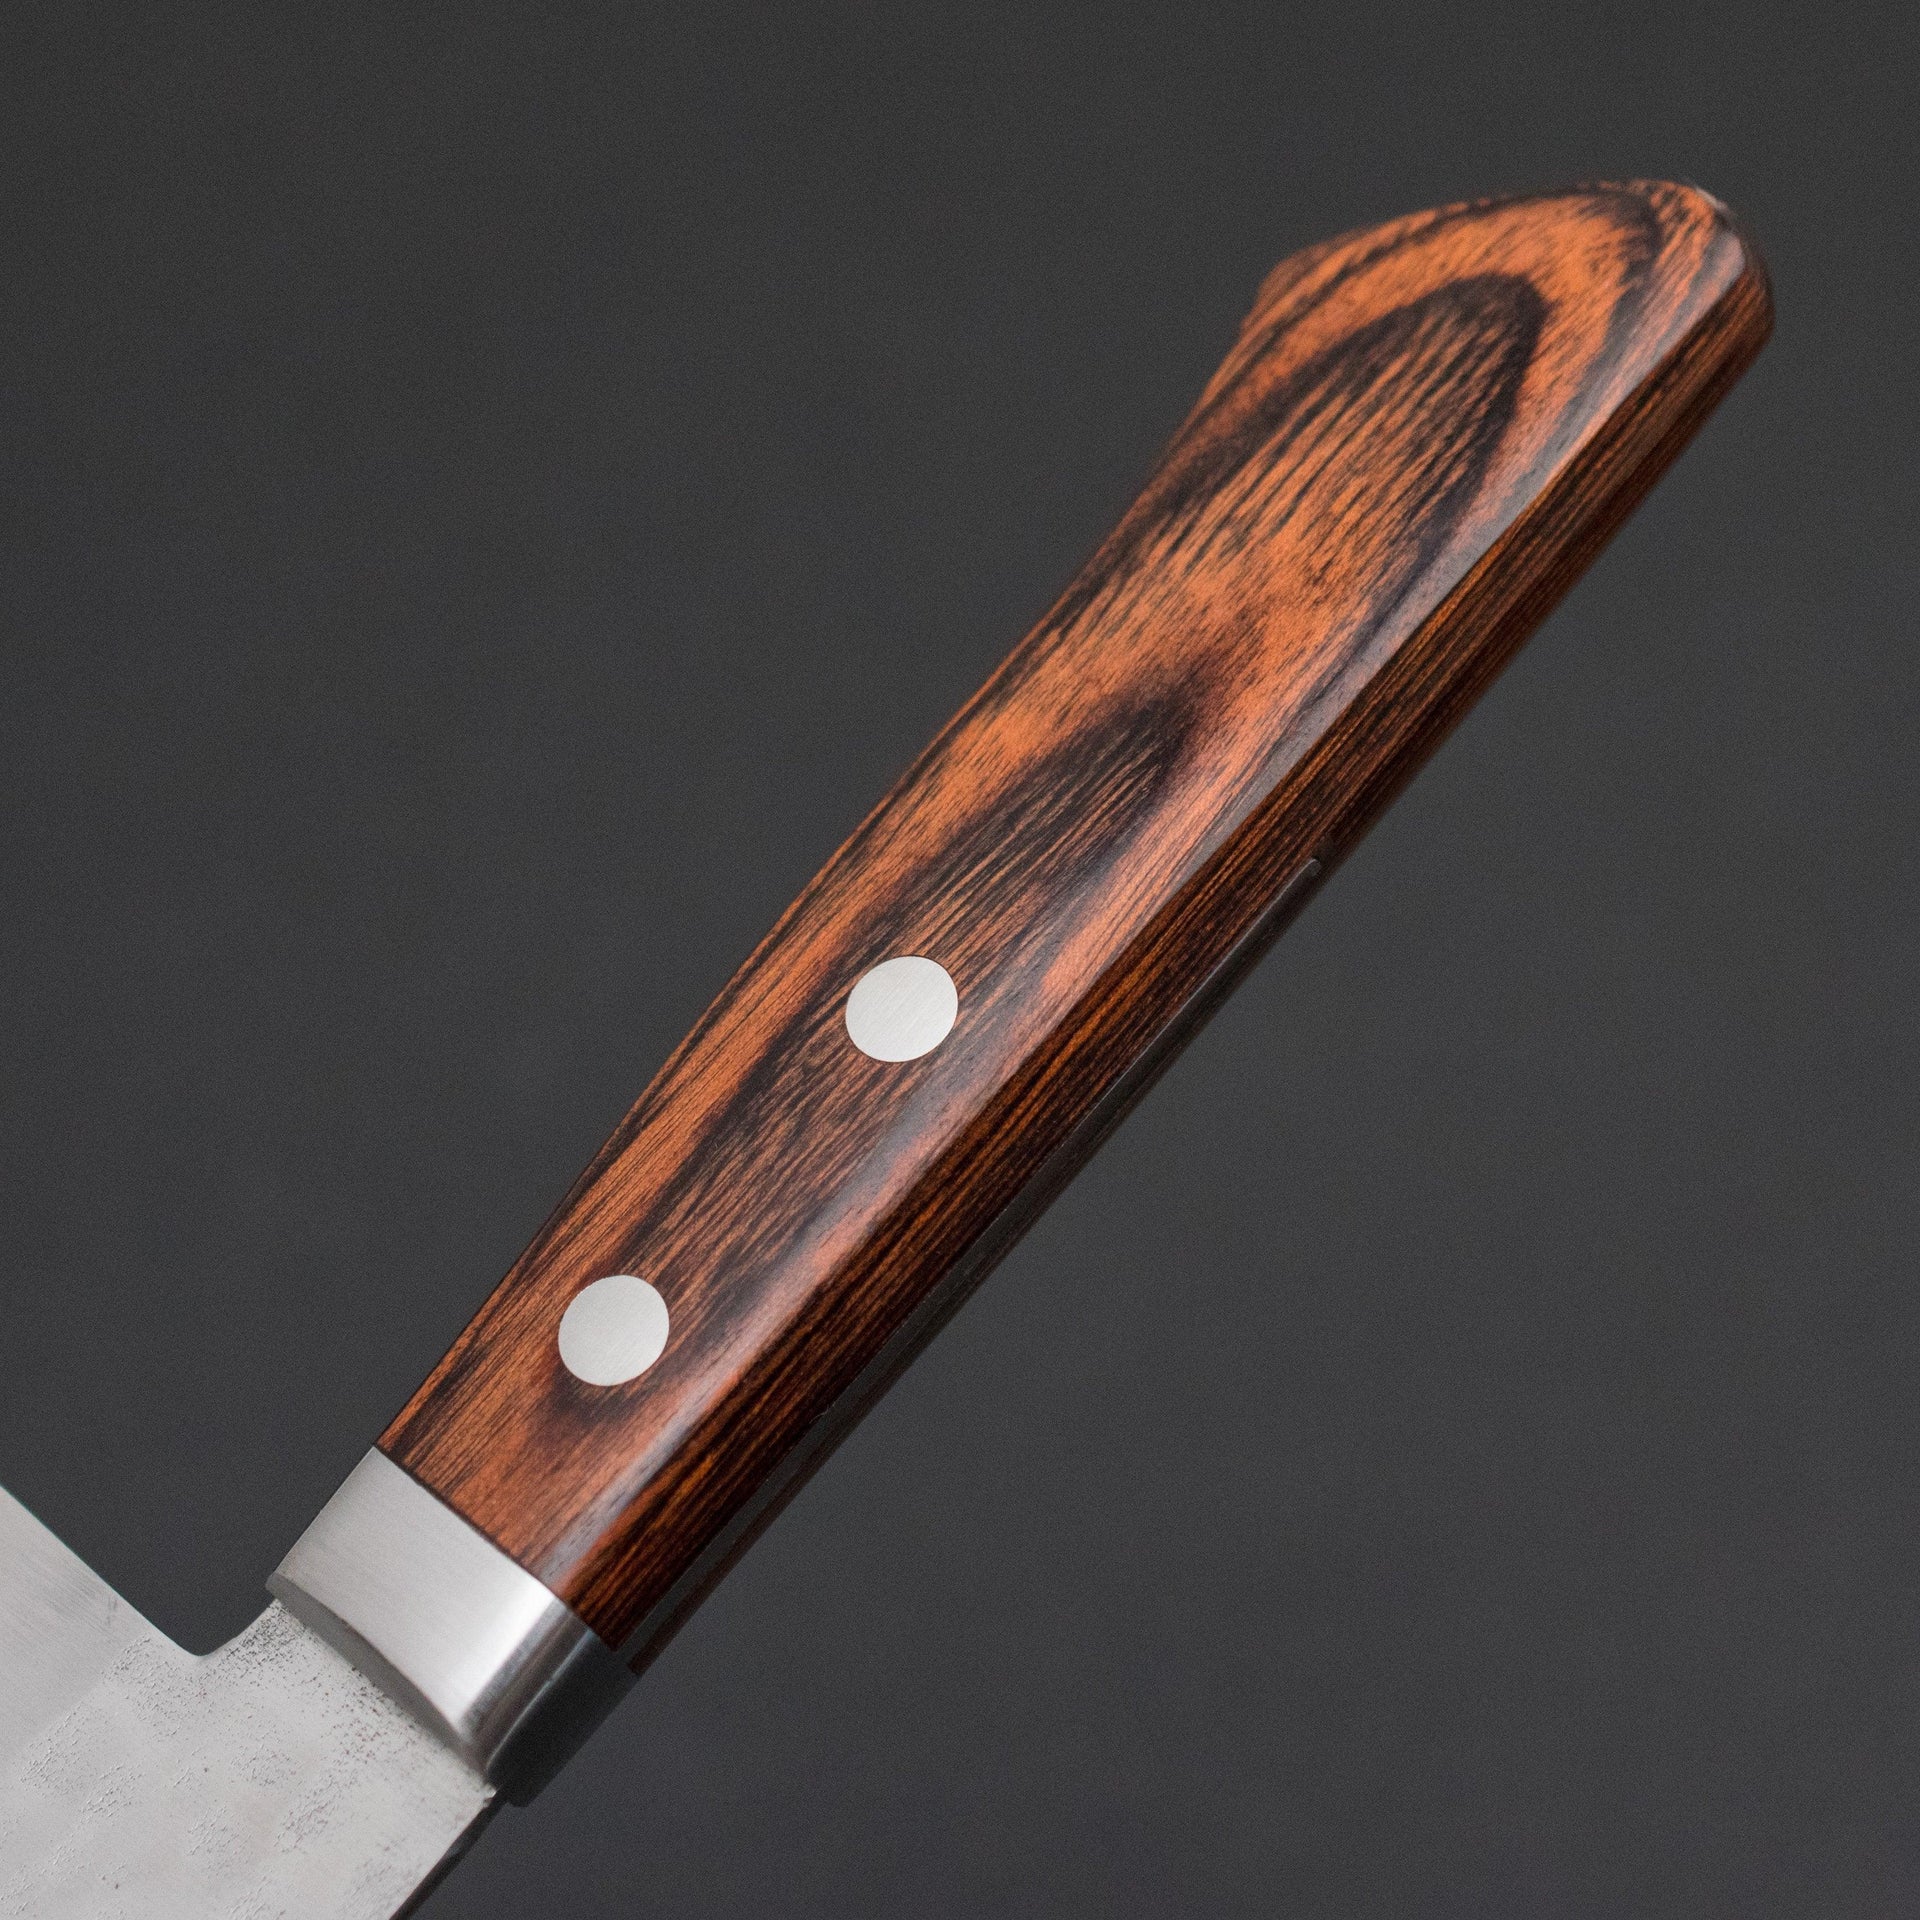 Masutani VG1 Hammered Gyuto 180mm-Knife-Masutani-Carbon Knife Co